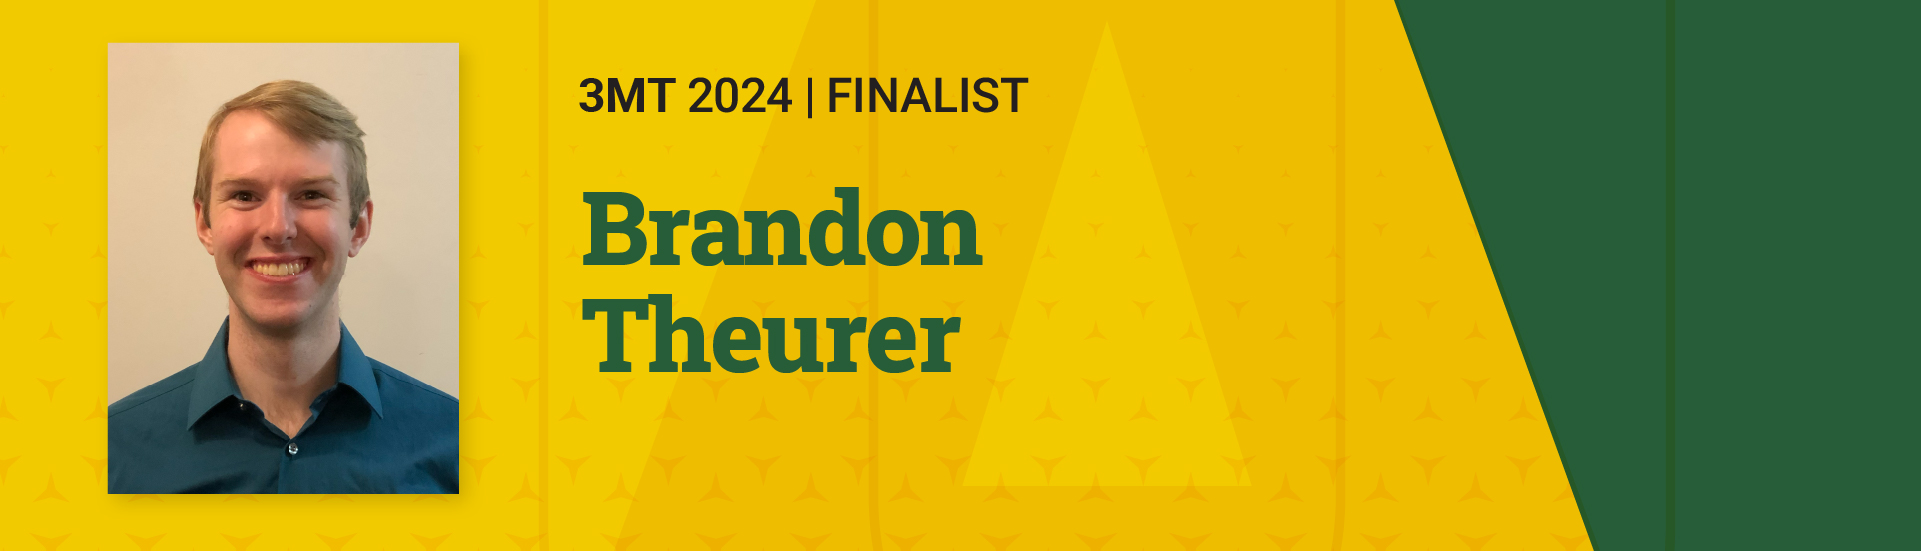 3MT 2024 Finalist Brandon Theurer